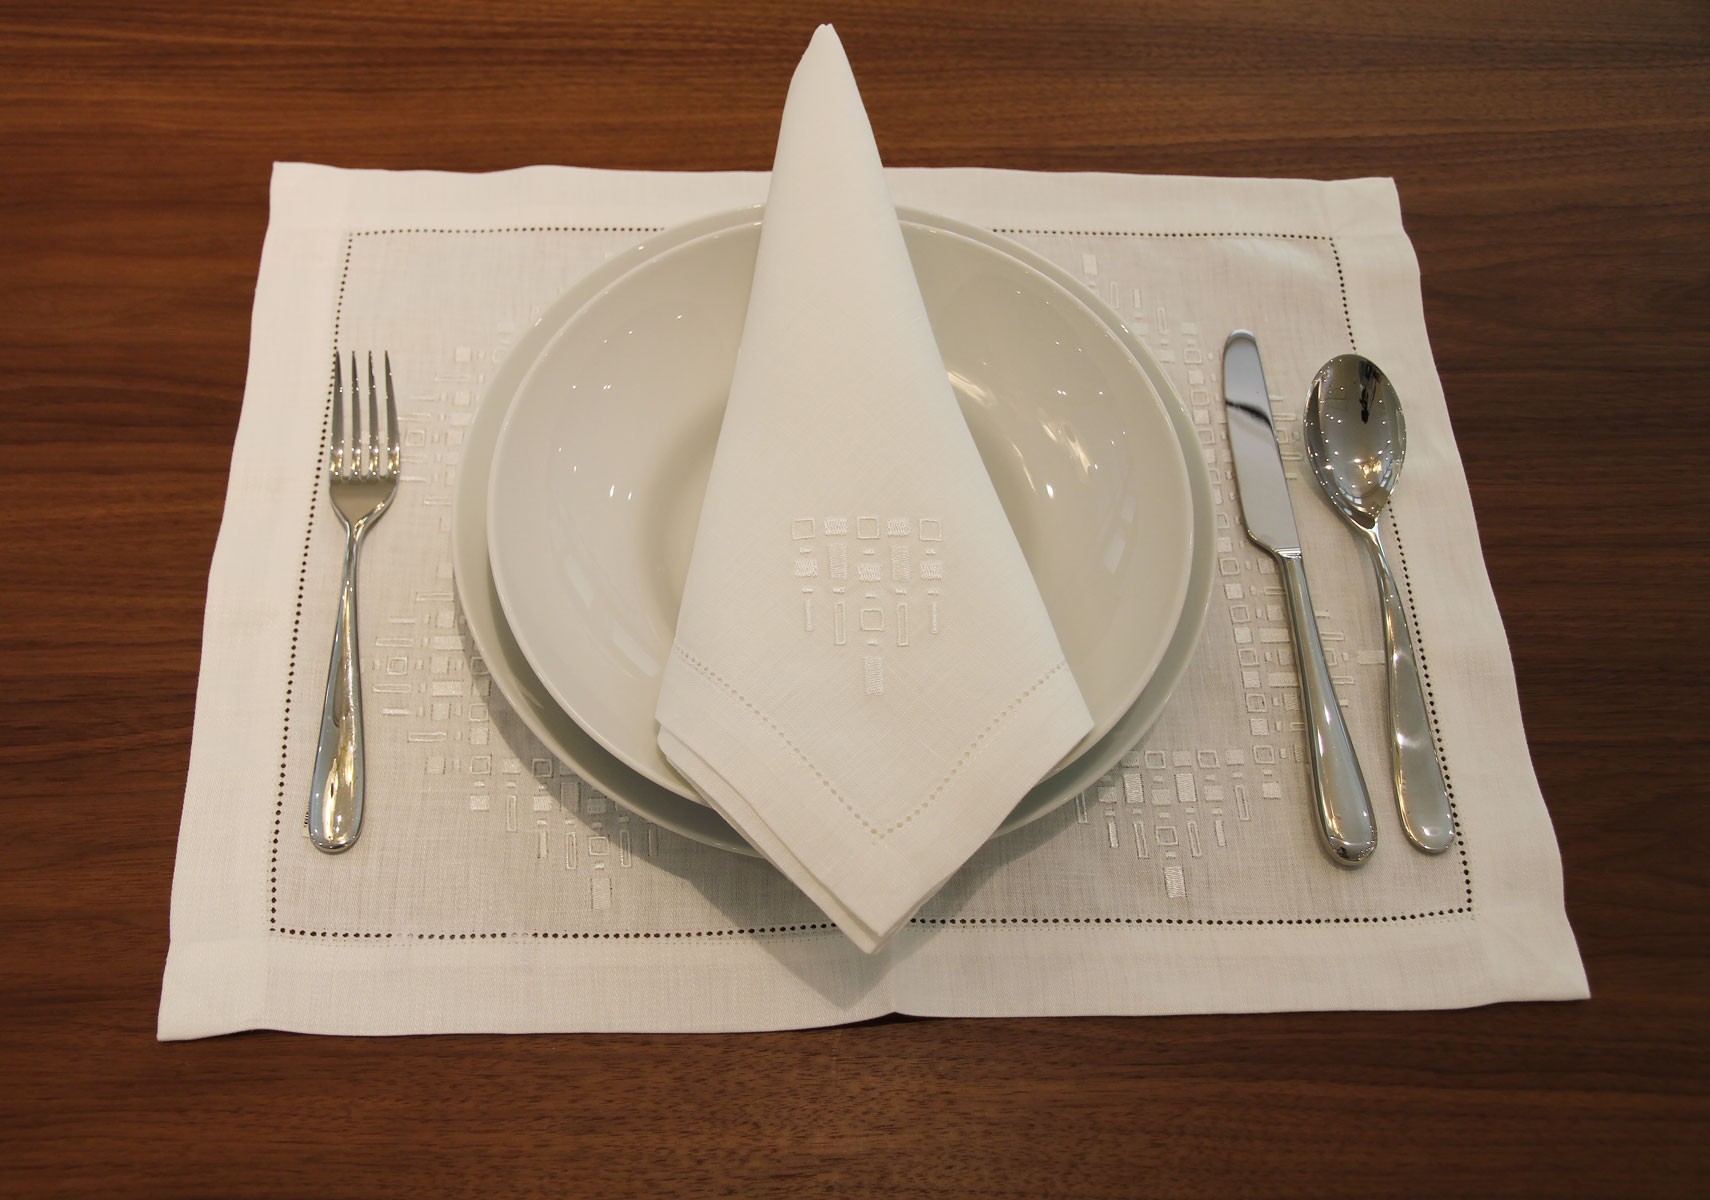 ixc.オリジナルテーブルリネン - ナプキン| カッシーナ・イクスシー 